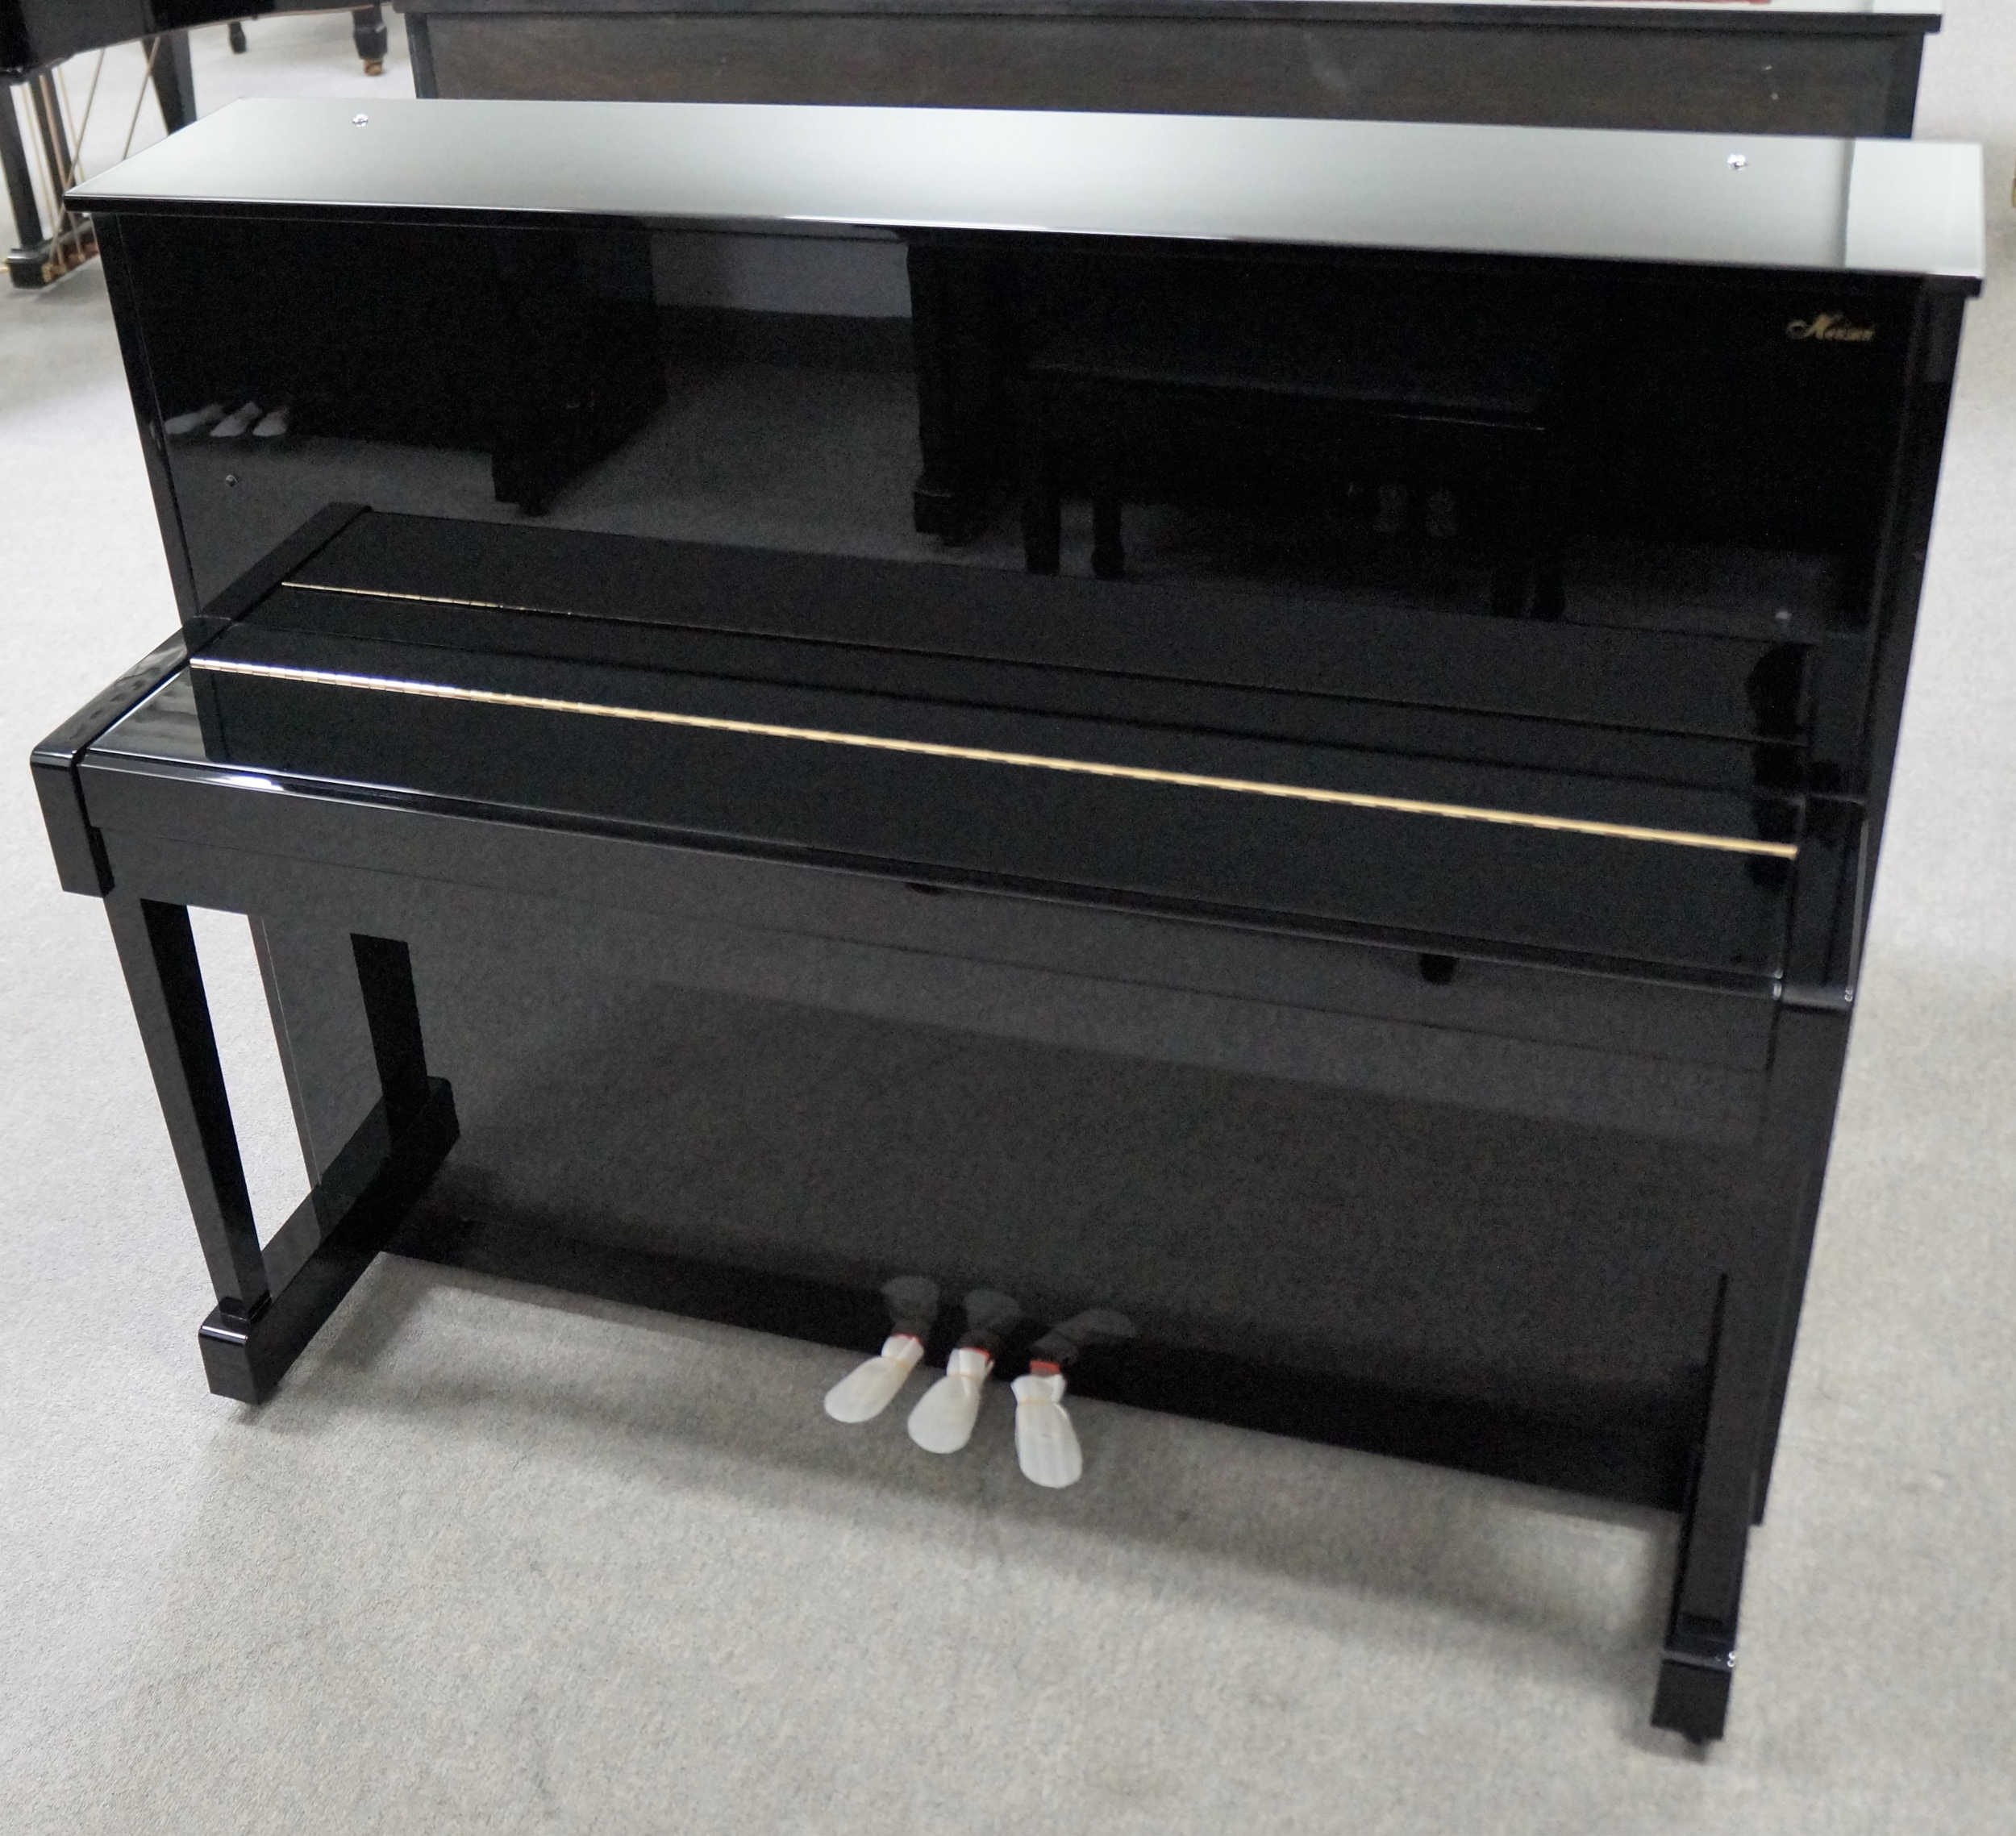 Kawai Professional Upright Piano 48